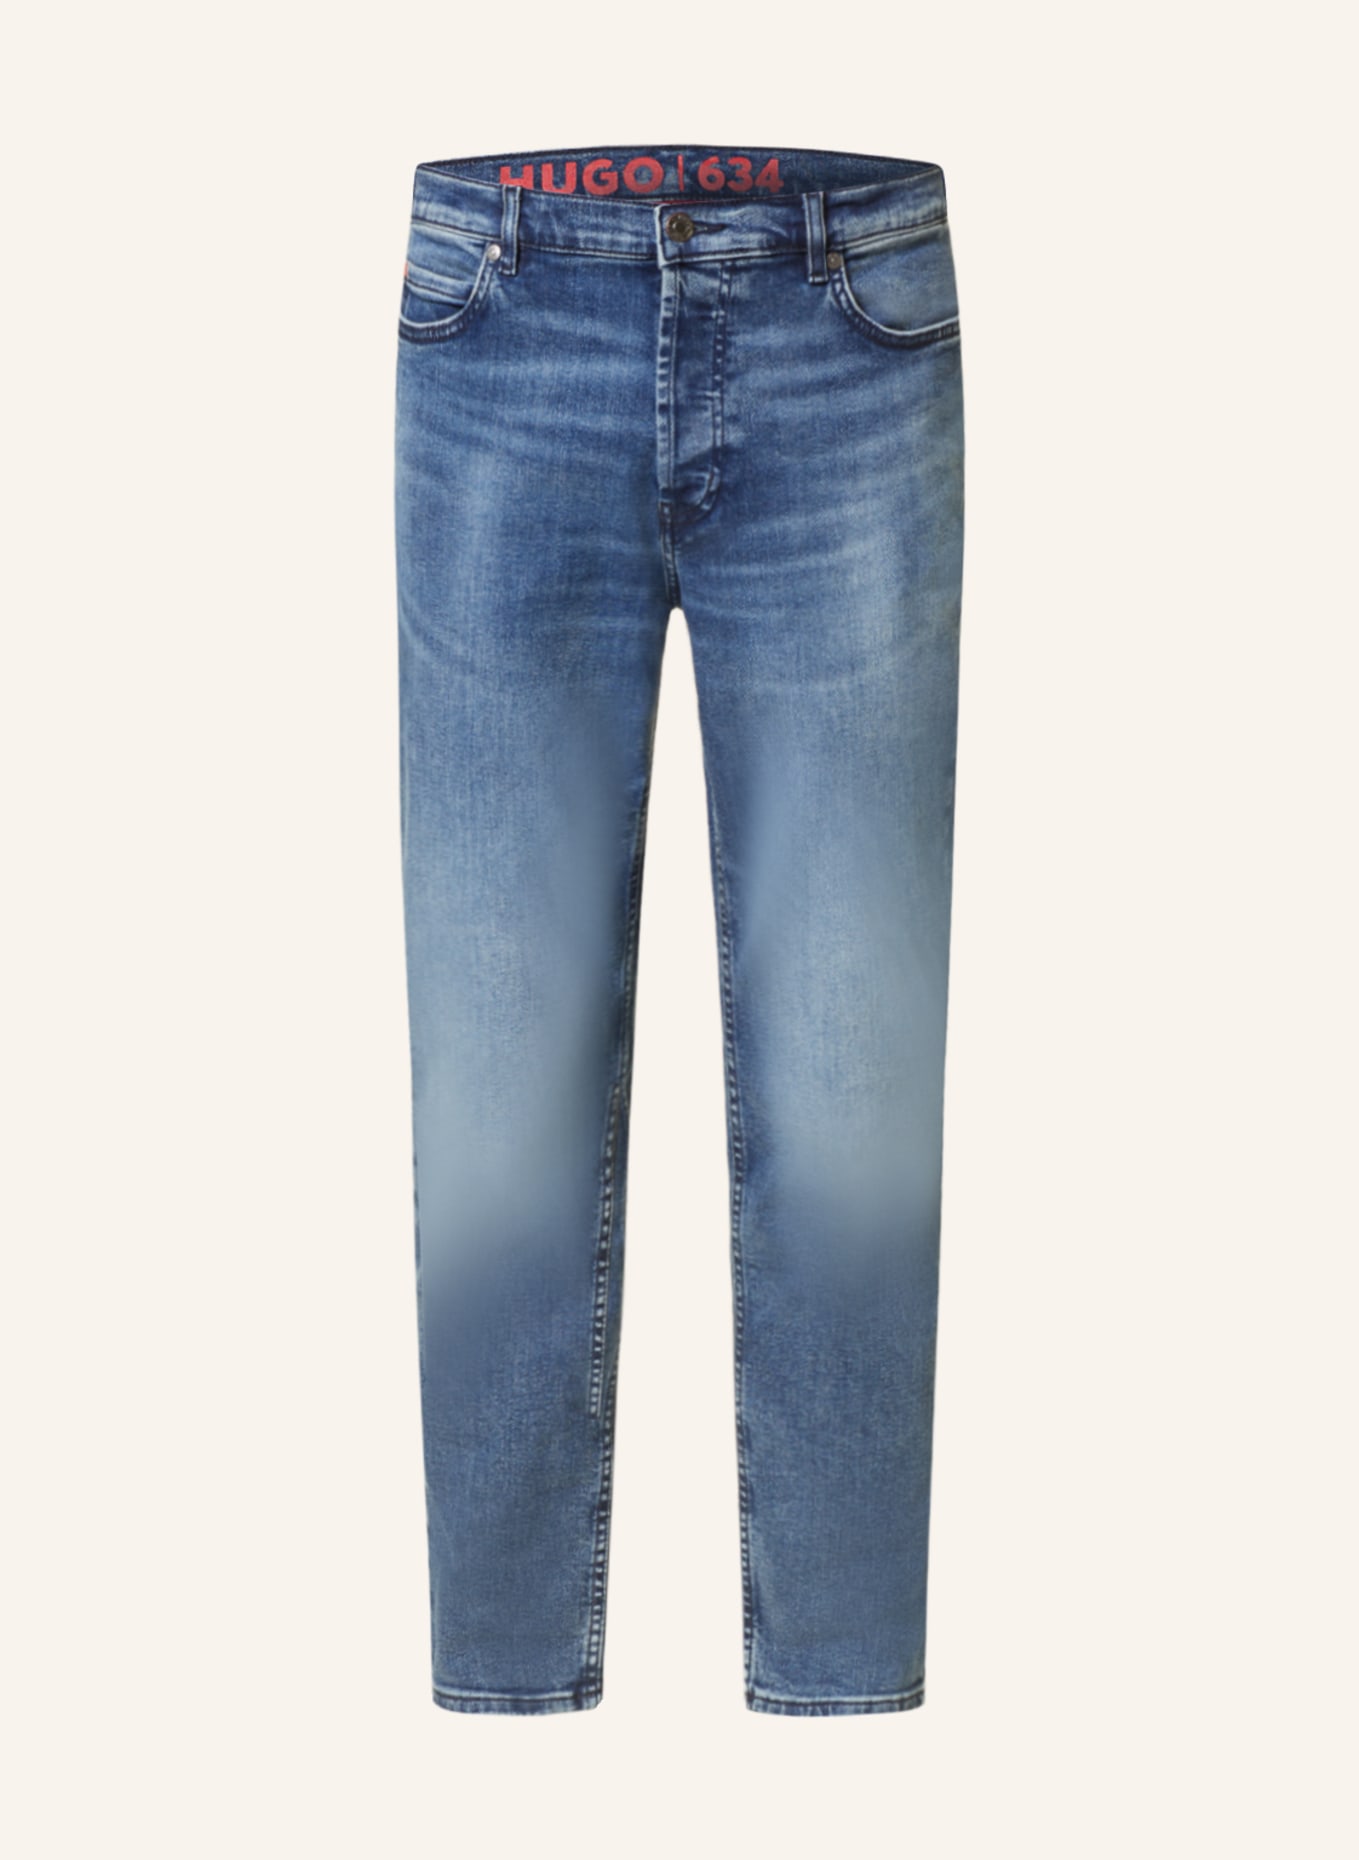 HUGO Jeans HUGO 634 Tapered Fit, Farbe: 425 MEDIUM BLUE (Bild 1)